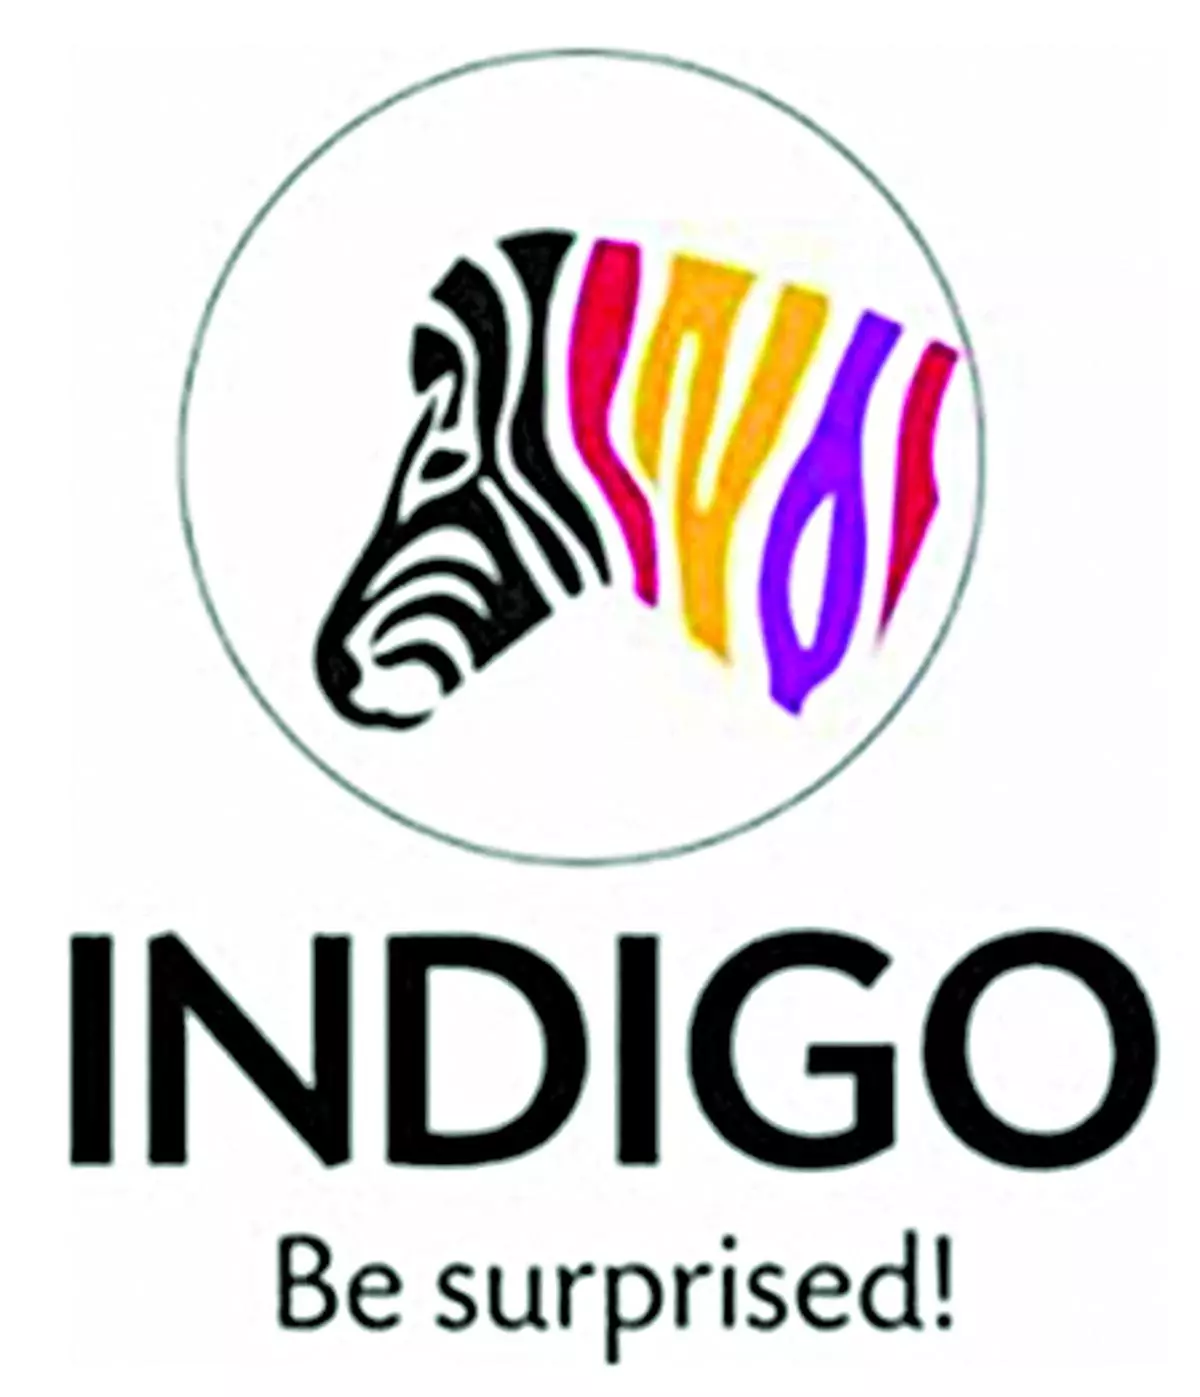 Indigo Paints IPO. Is it worth Subscribing? -